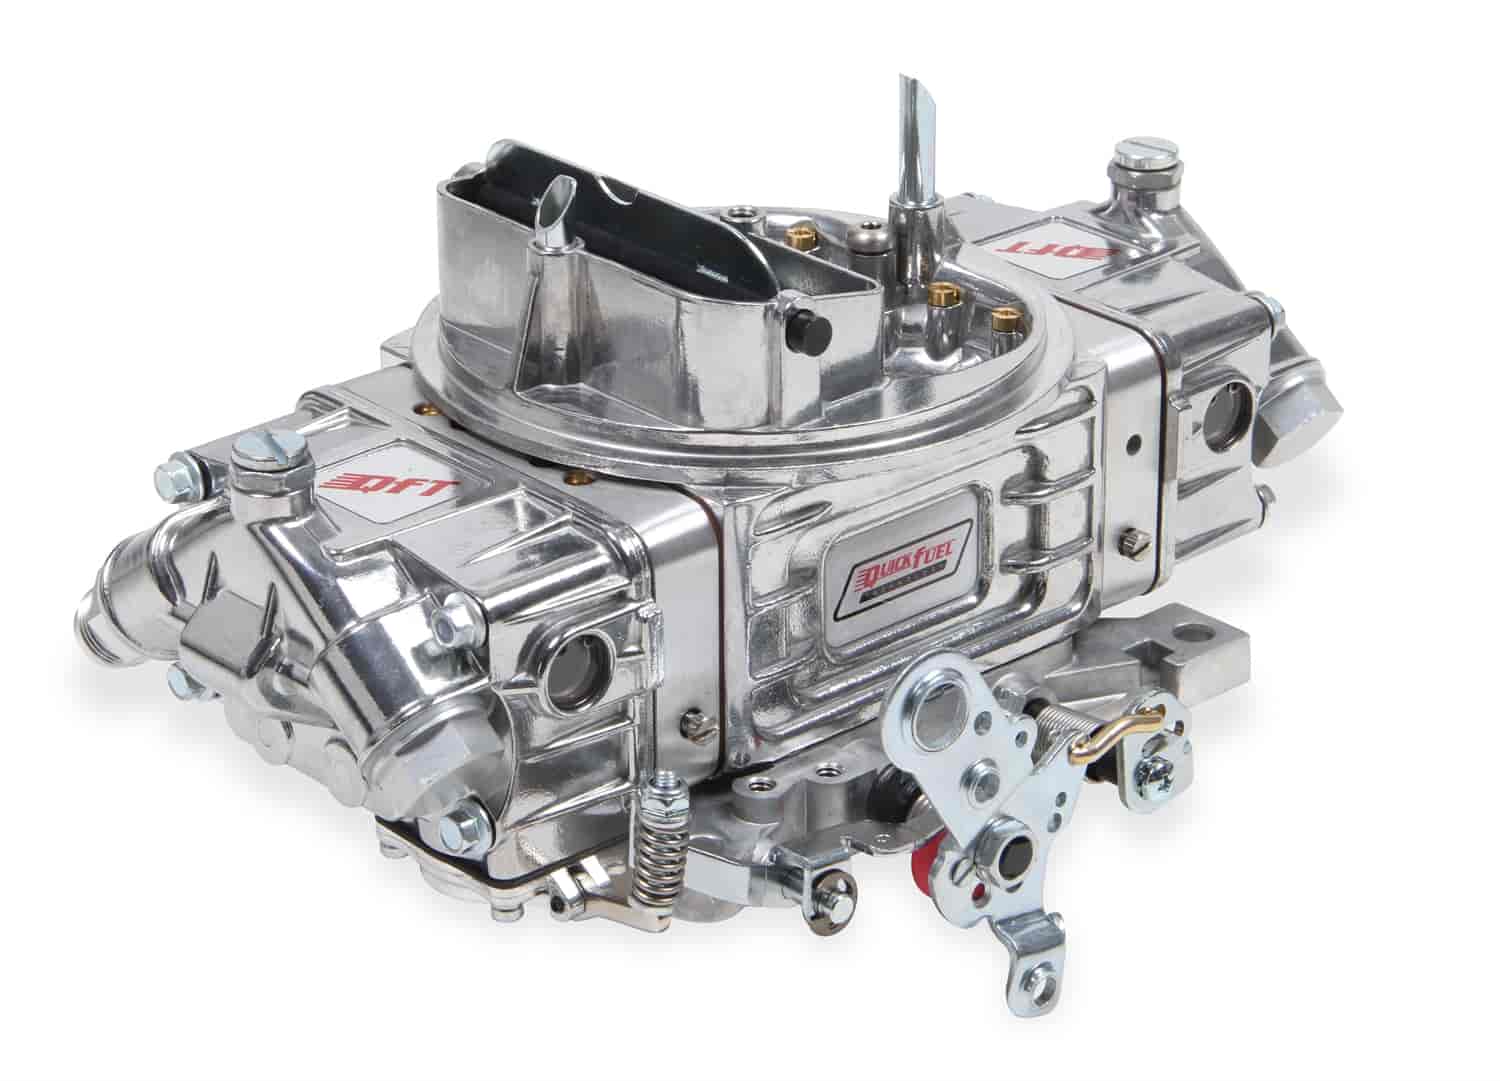 850 CFM 4-bbl SSR Carburetor For Manual Trans or Auto w/ Transbrake at Above 3000 ft. Vacuum Secondary